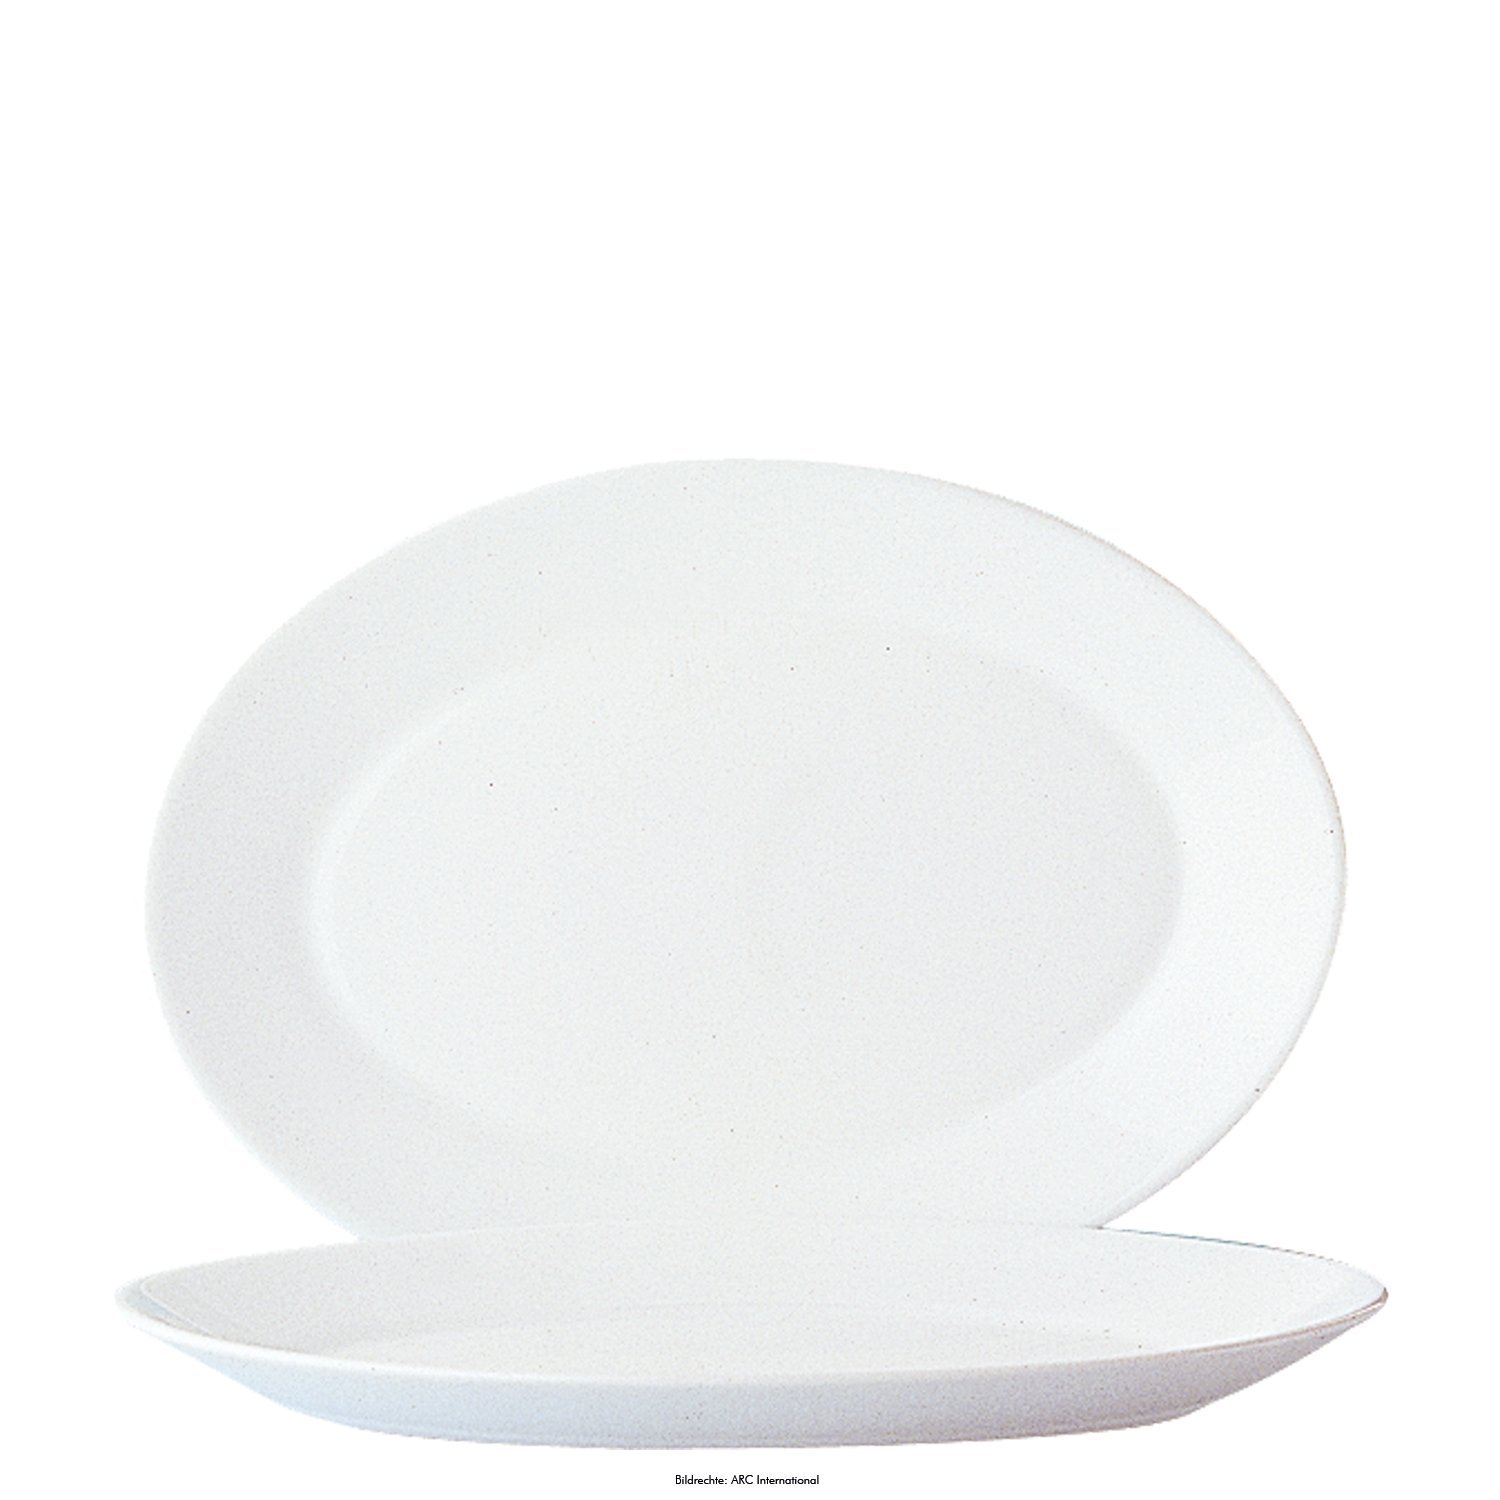 Arcoroc Restaurant Series Plate Plain White, Platte oval 29cm